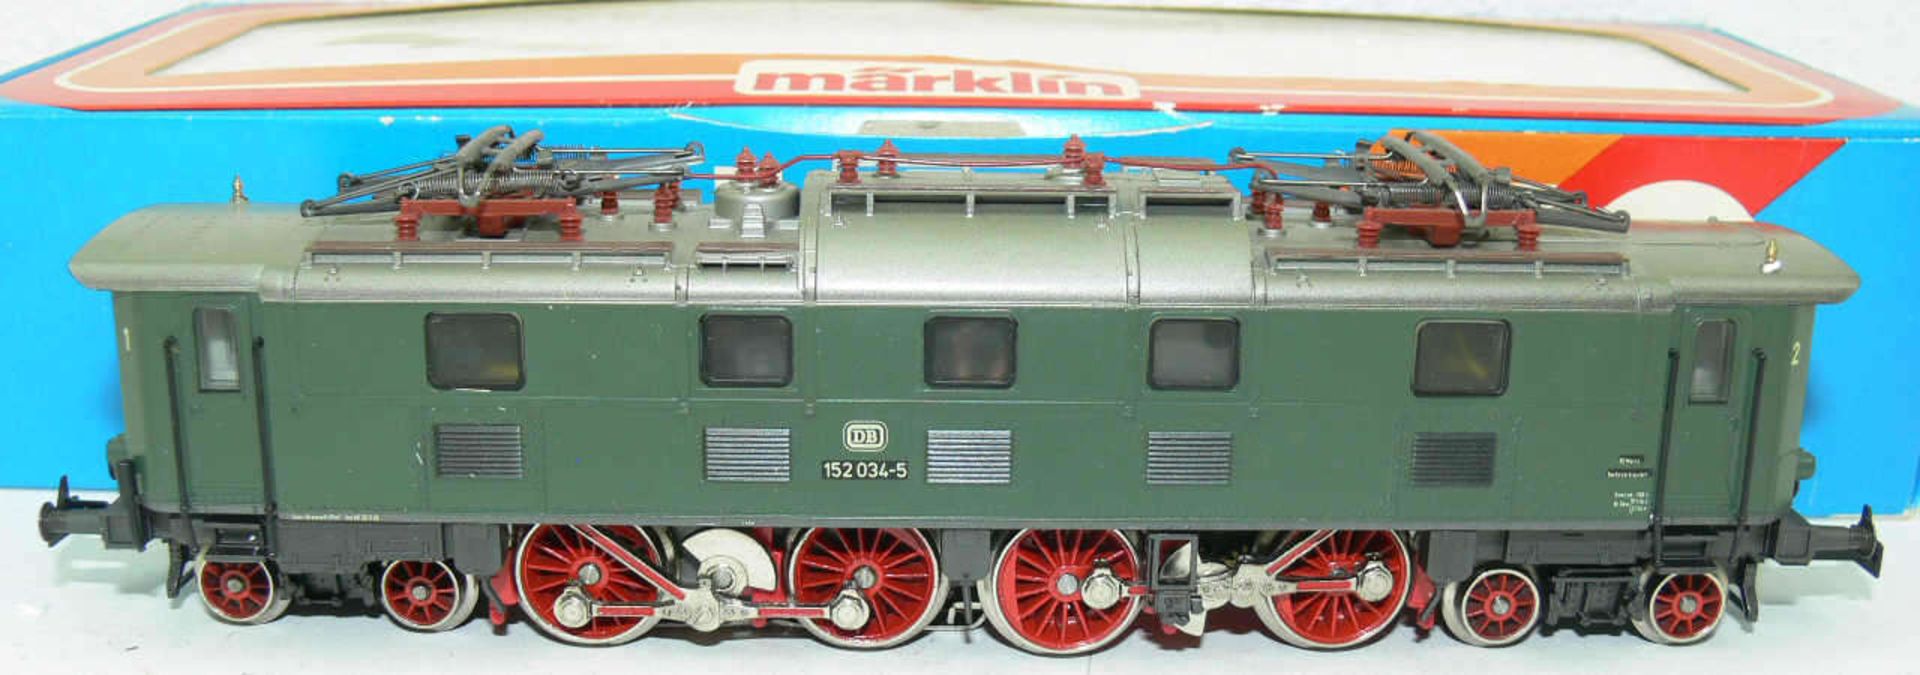 Märklin H0 3366, E - Lokomotive BR 152 der DB. BN 152 034-5. Sehr guter Zustand. In OVP.